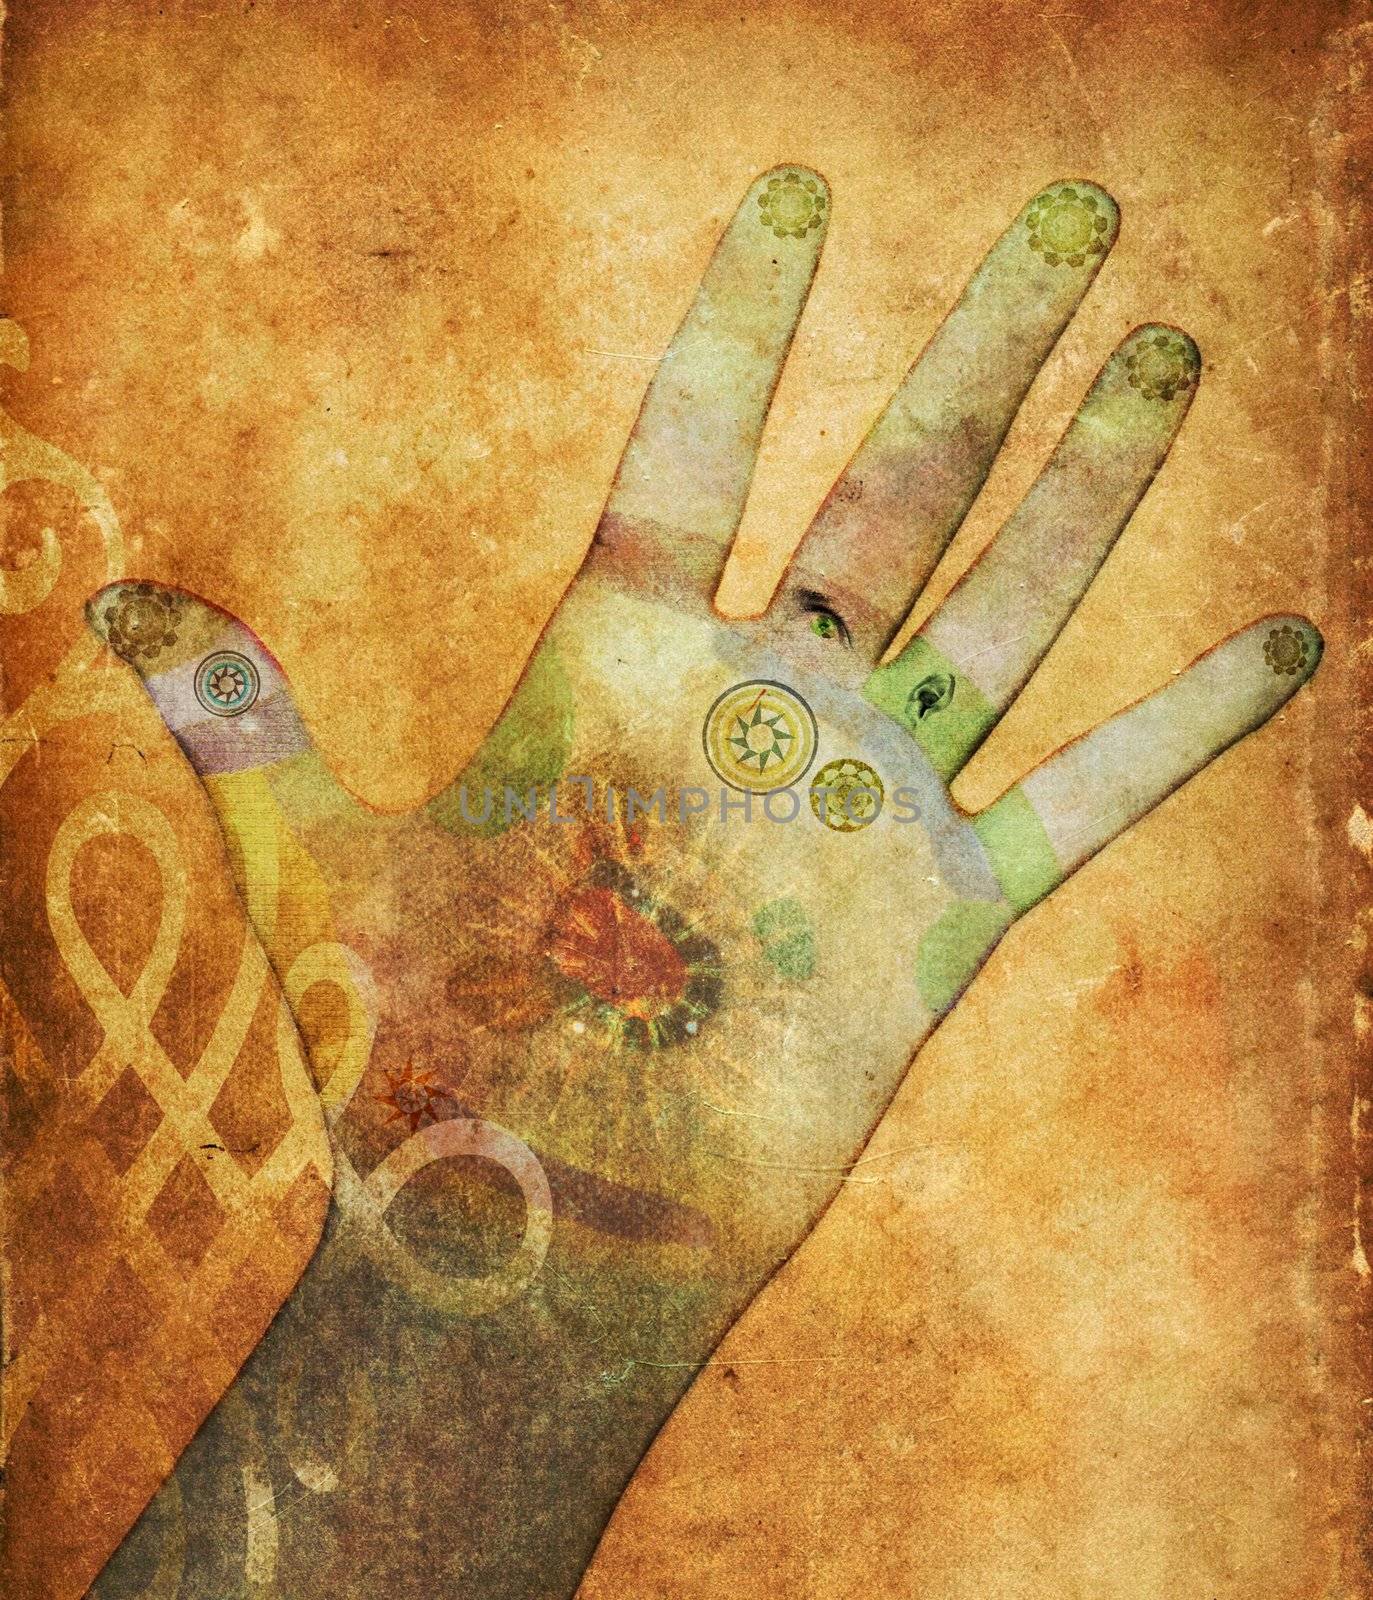 Chakra hand - healing energy in sepia